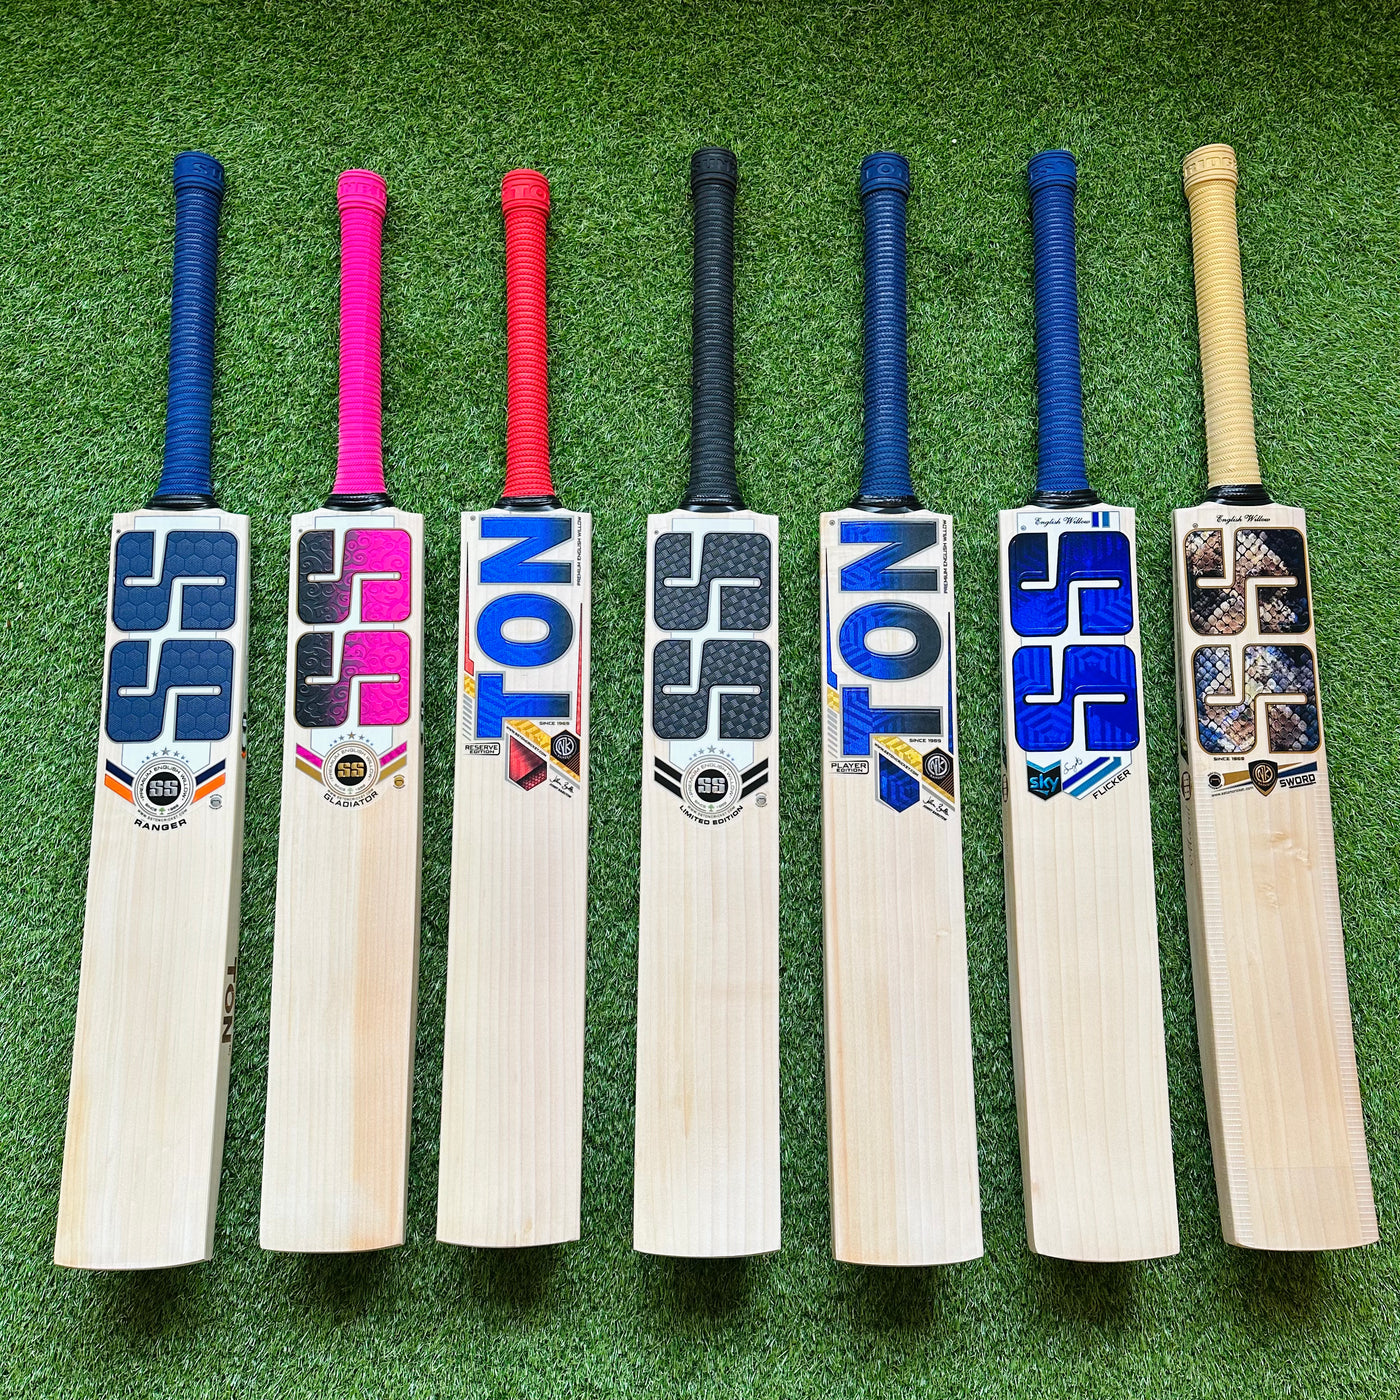 ss cricket bats